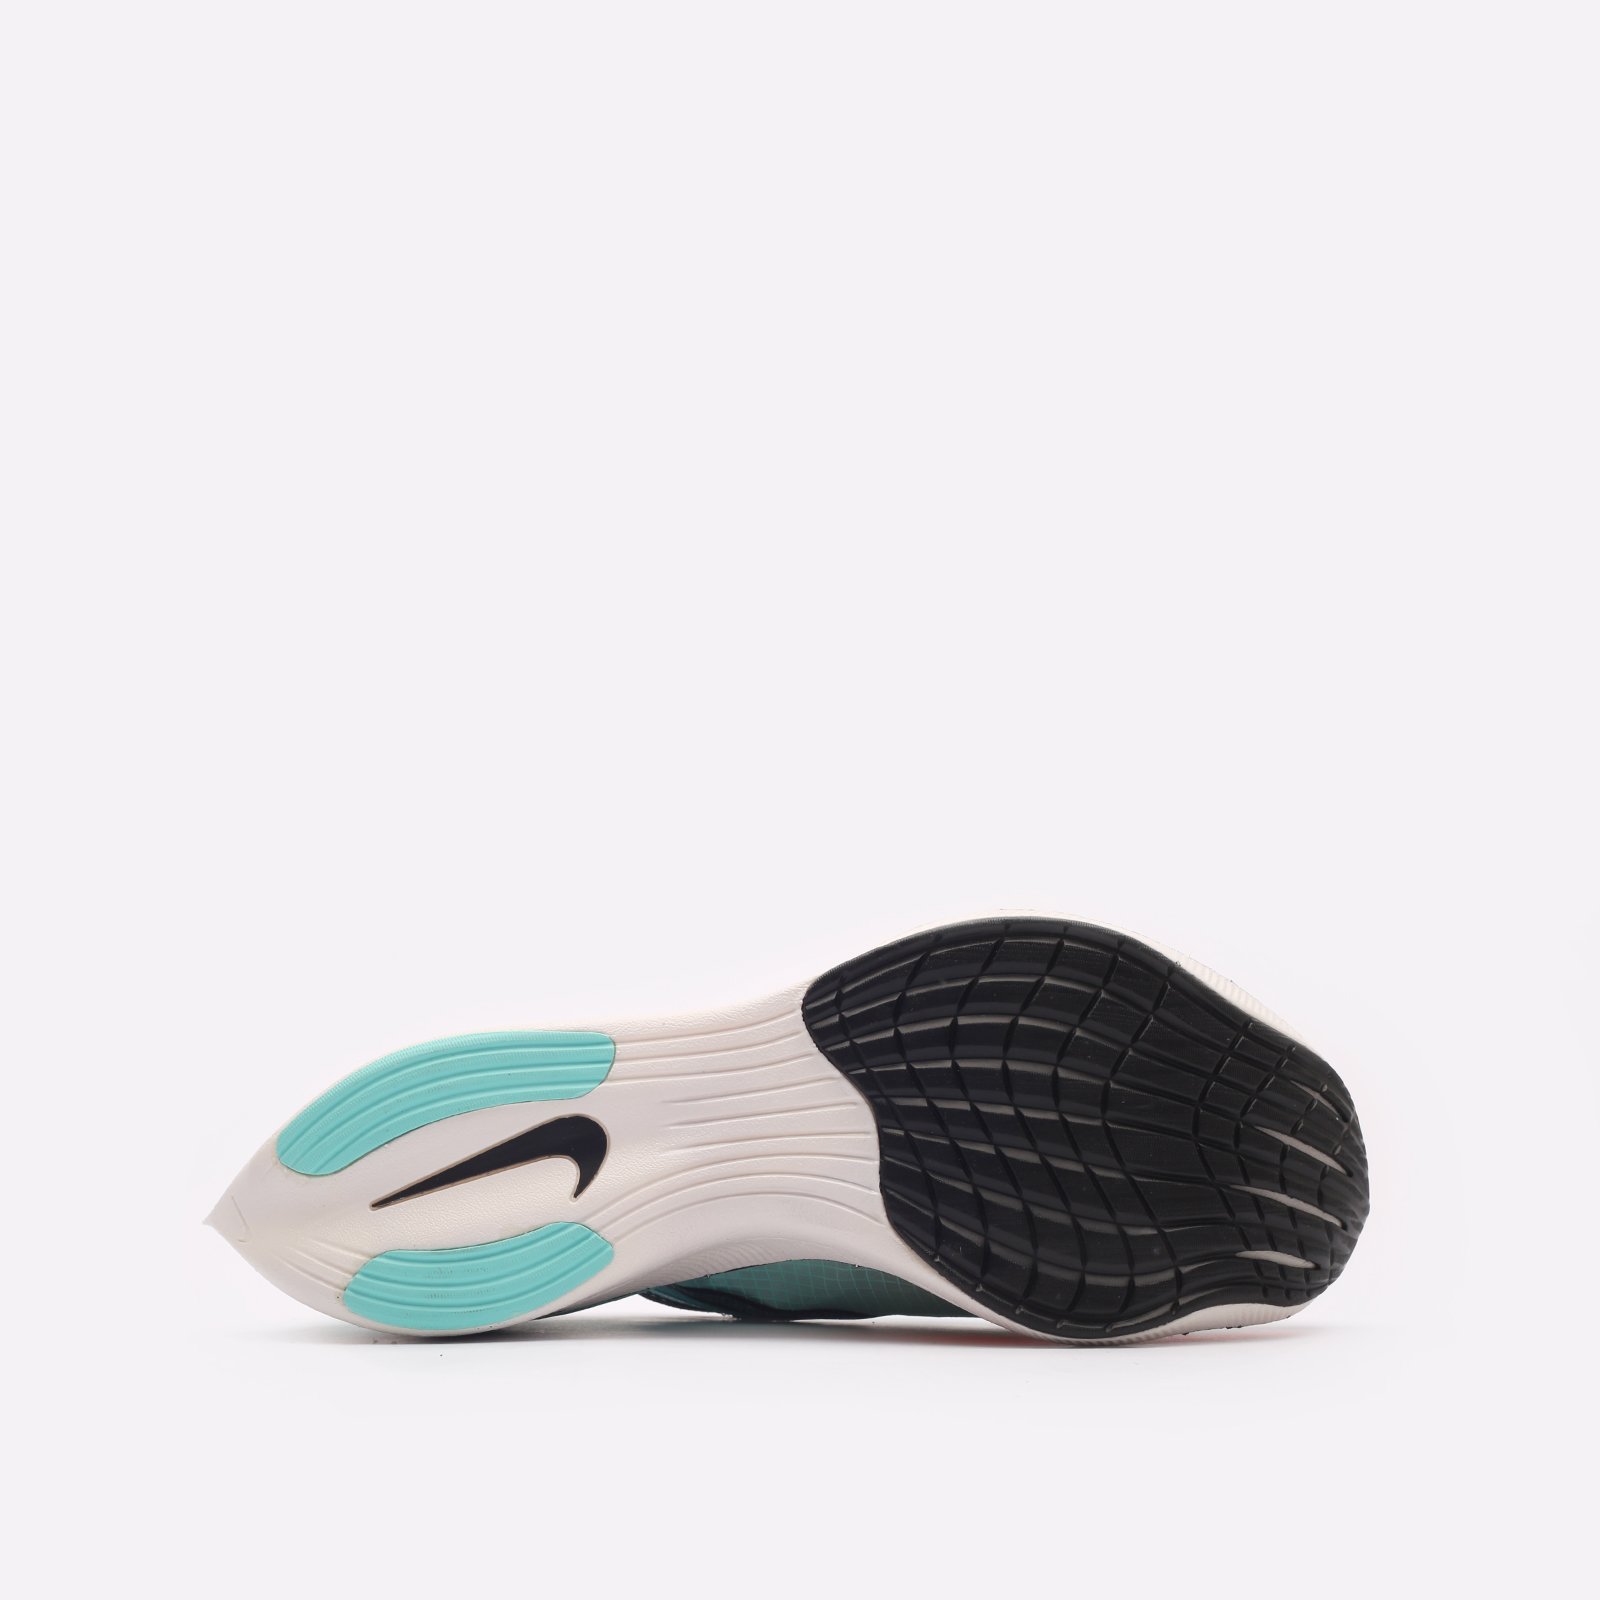 мужские кроссовки Nike Zoomx Vaporfly Next% HKNE  (CD4553-300)  - цена, описание, фото 5